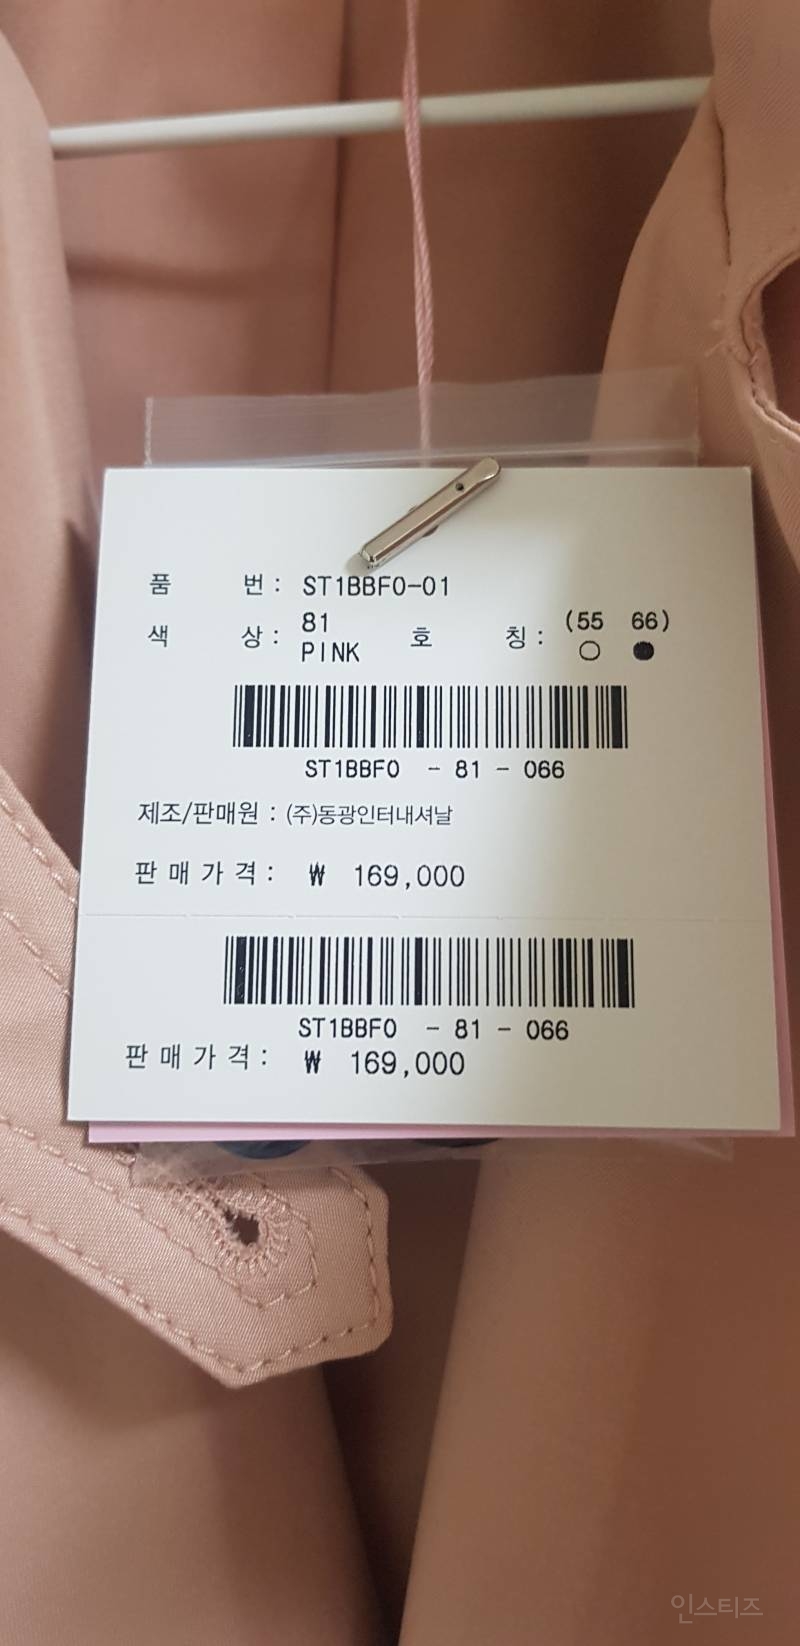 SOUP 인디핑크 트렌치코트 새상품 할인판매중 | 인스티즈